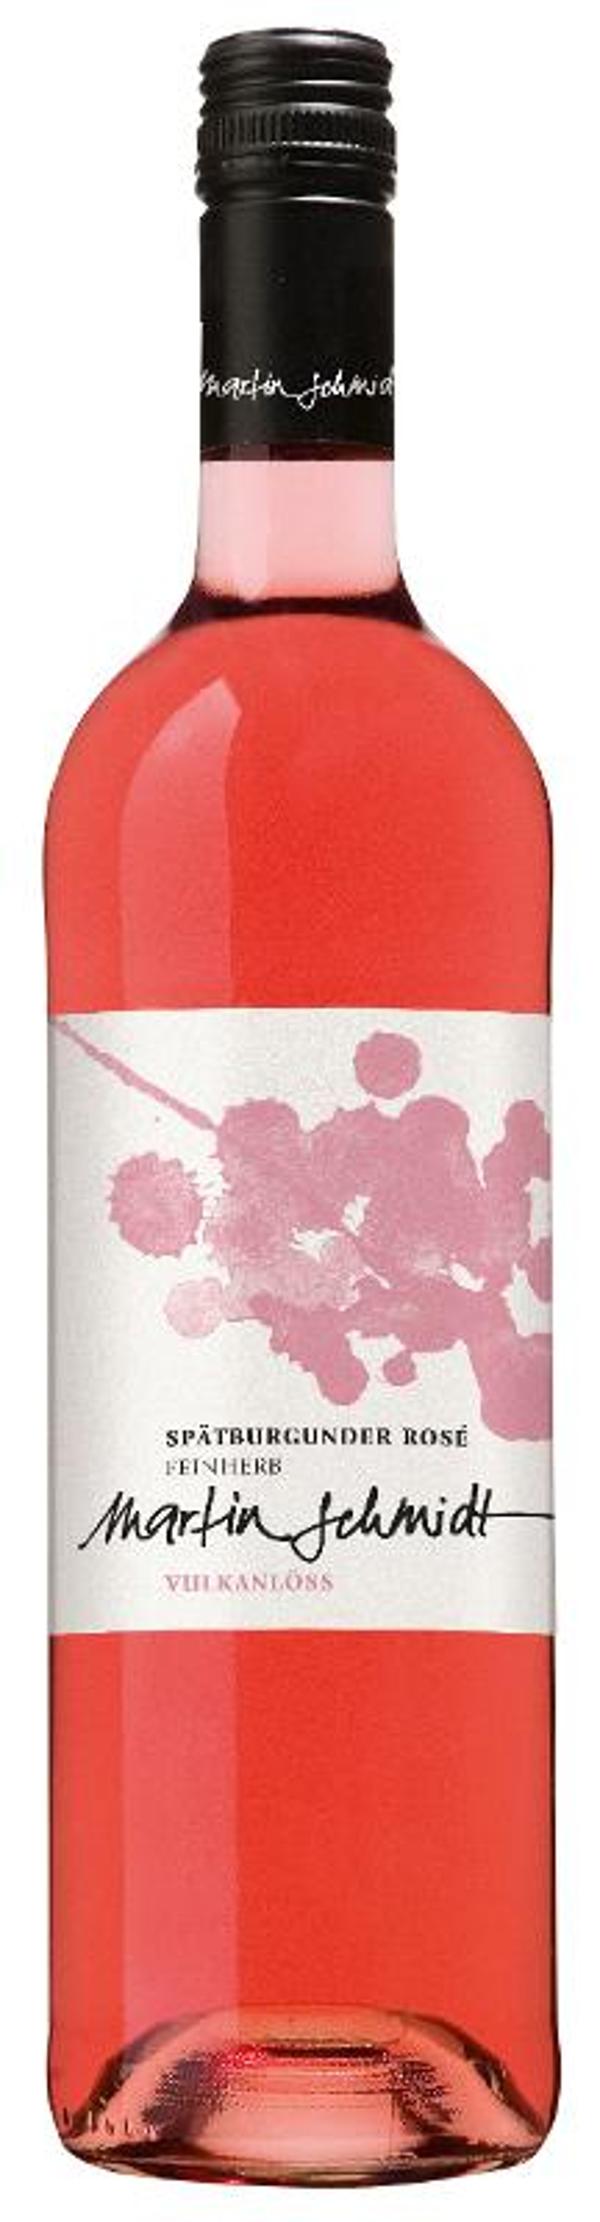 Produktfoto zu Vulkanlöss Spätburgunder Rosé, 0,75 l